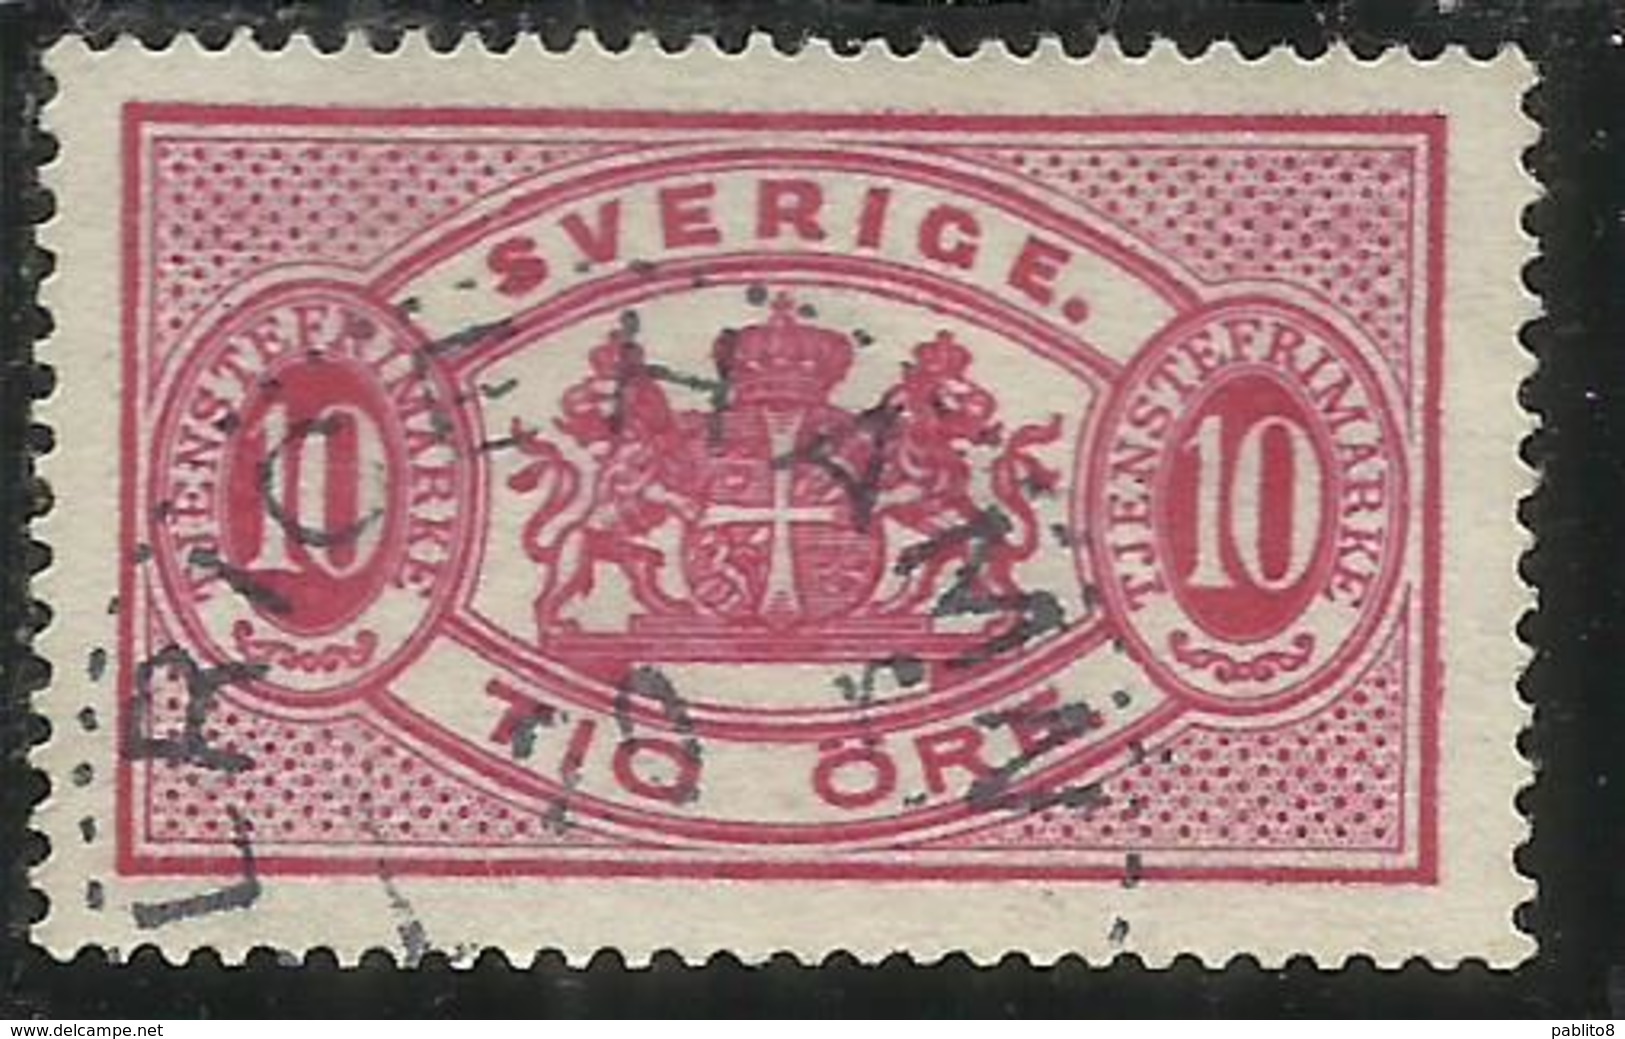 SWEDEN SVERIGE SVEZIA SUEDE 1881 1895 OFFICIAL STAMPS ORE 10o USATO USED OBLITERE' - Revenue Stamps